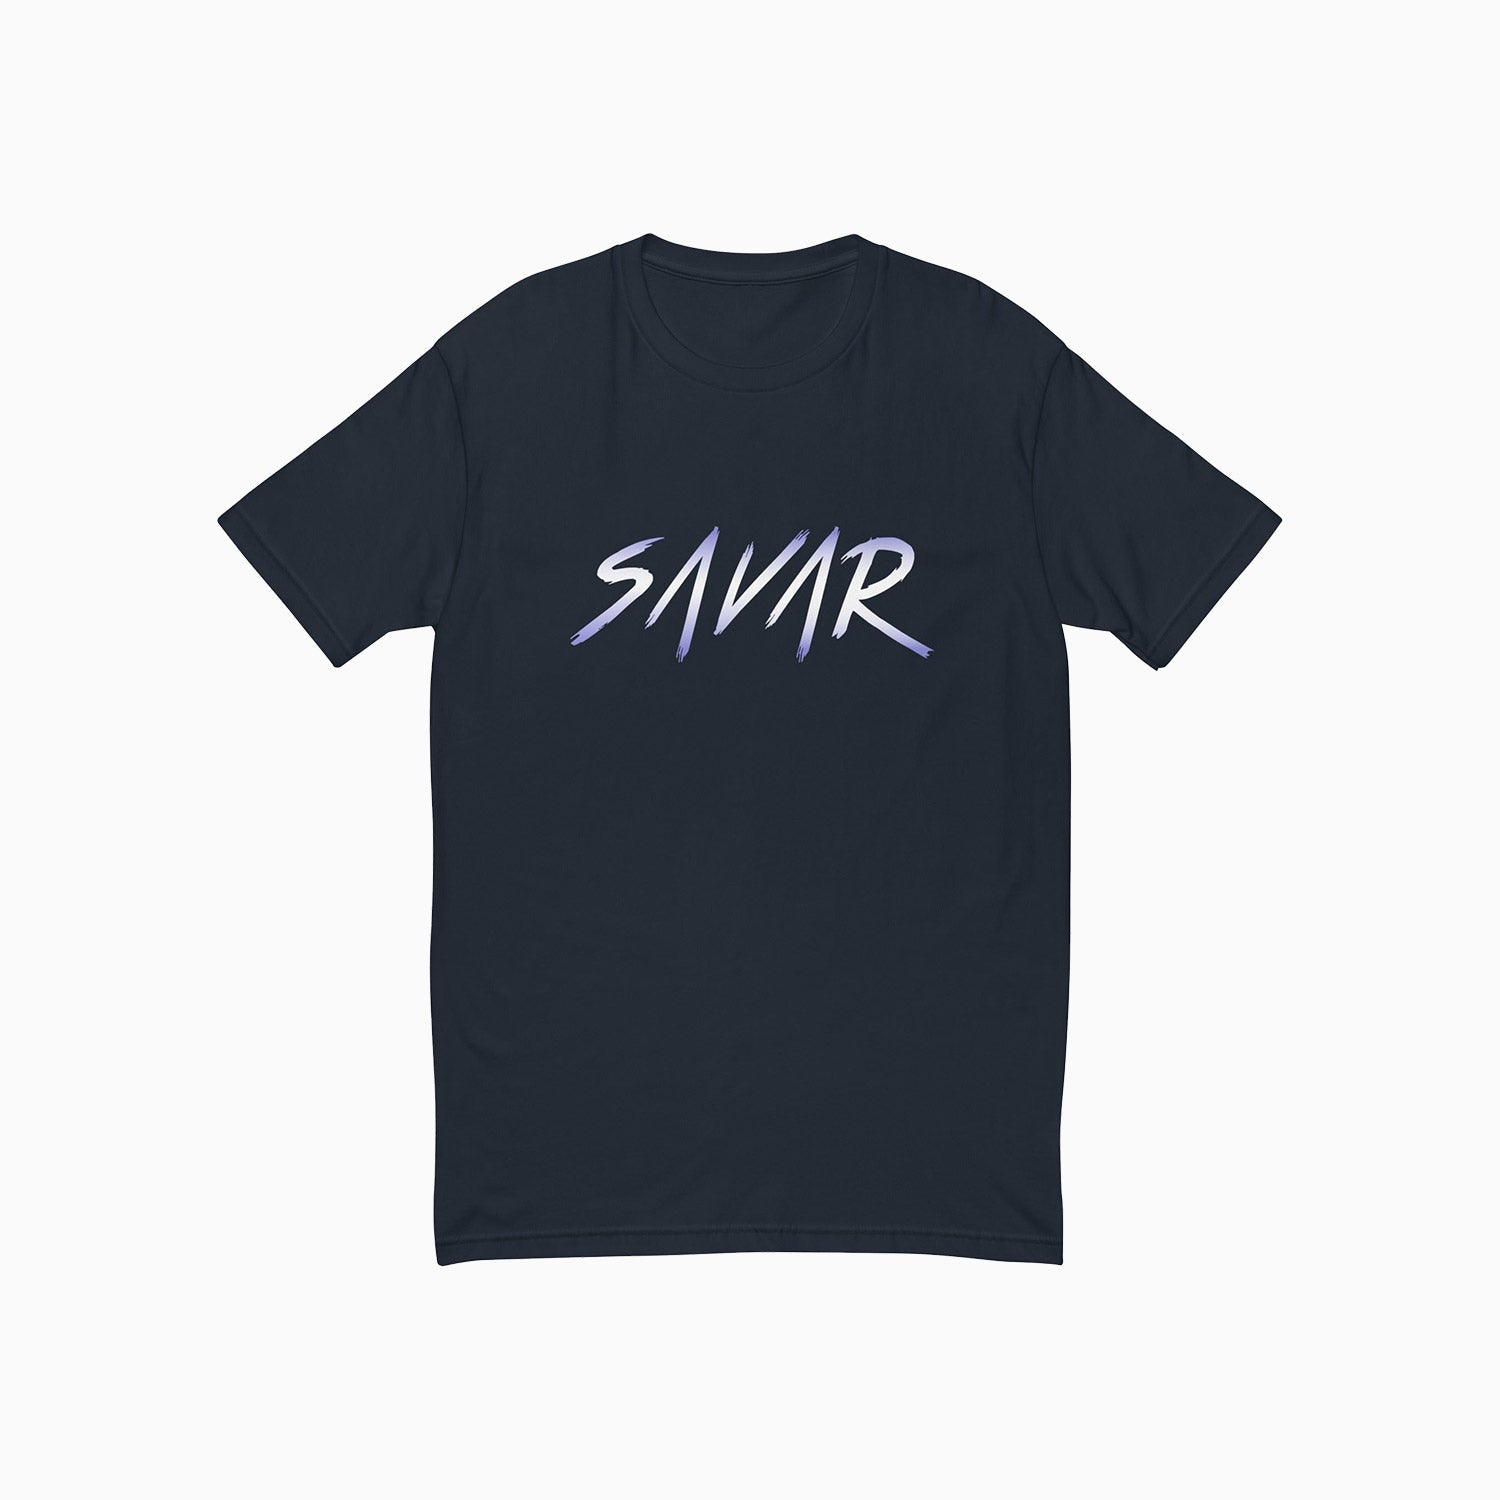 signature-design-printed-crew-neck-navy-blue-t-shirt-for-men-st111-410